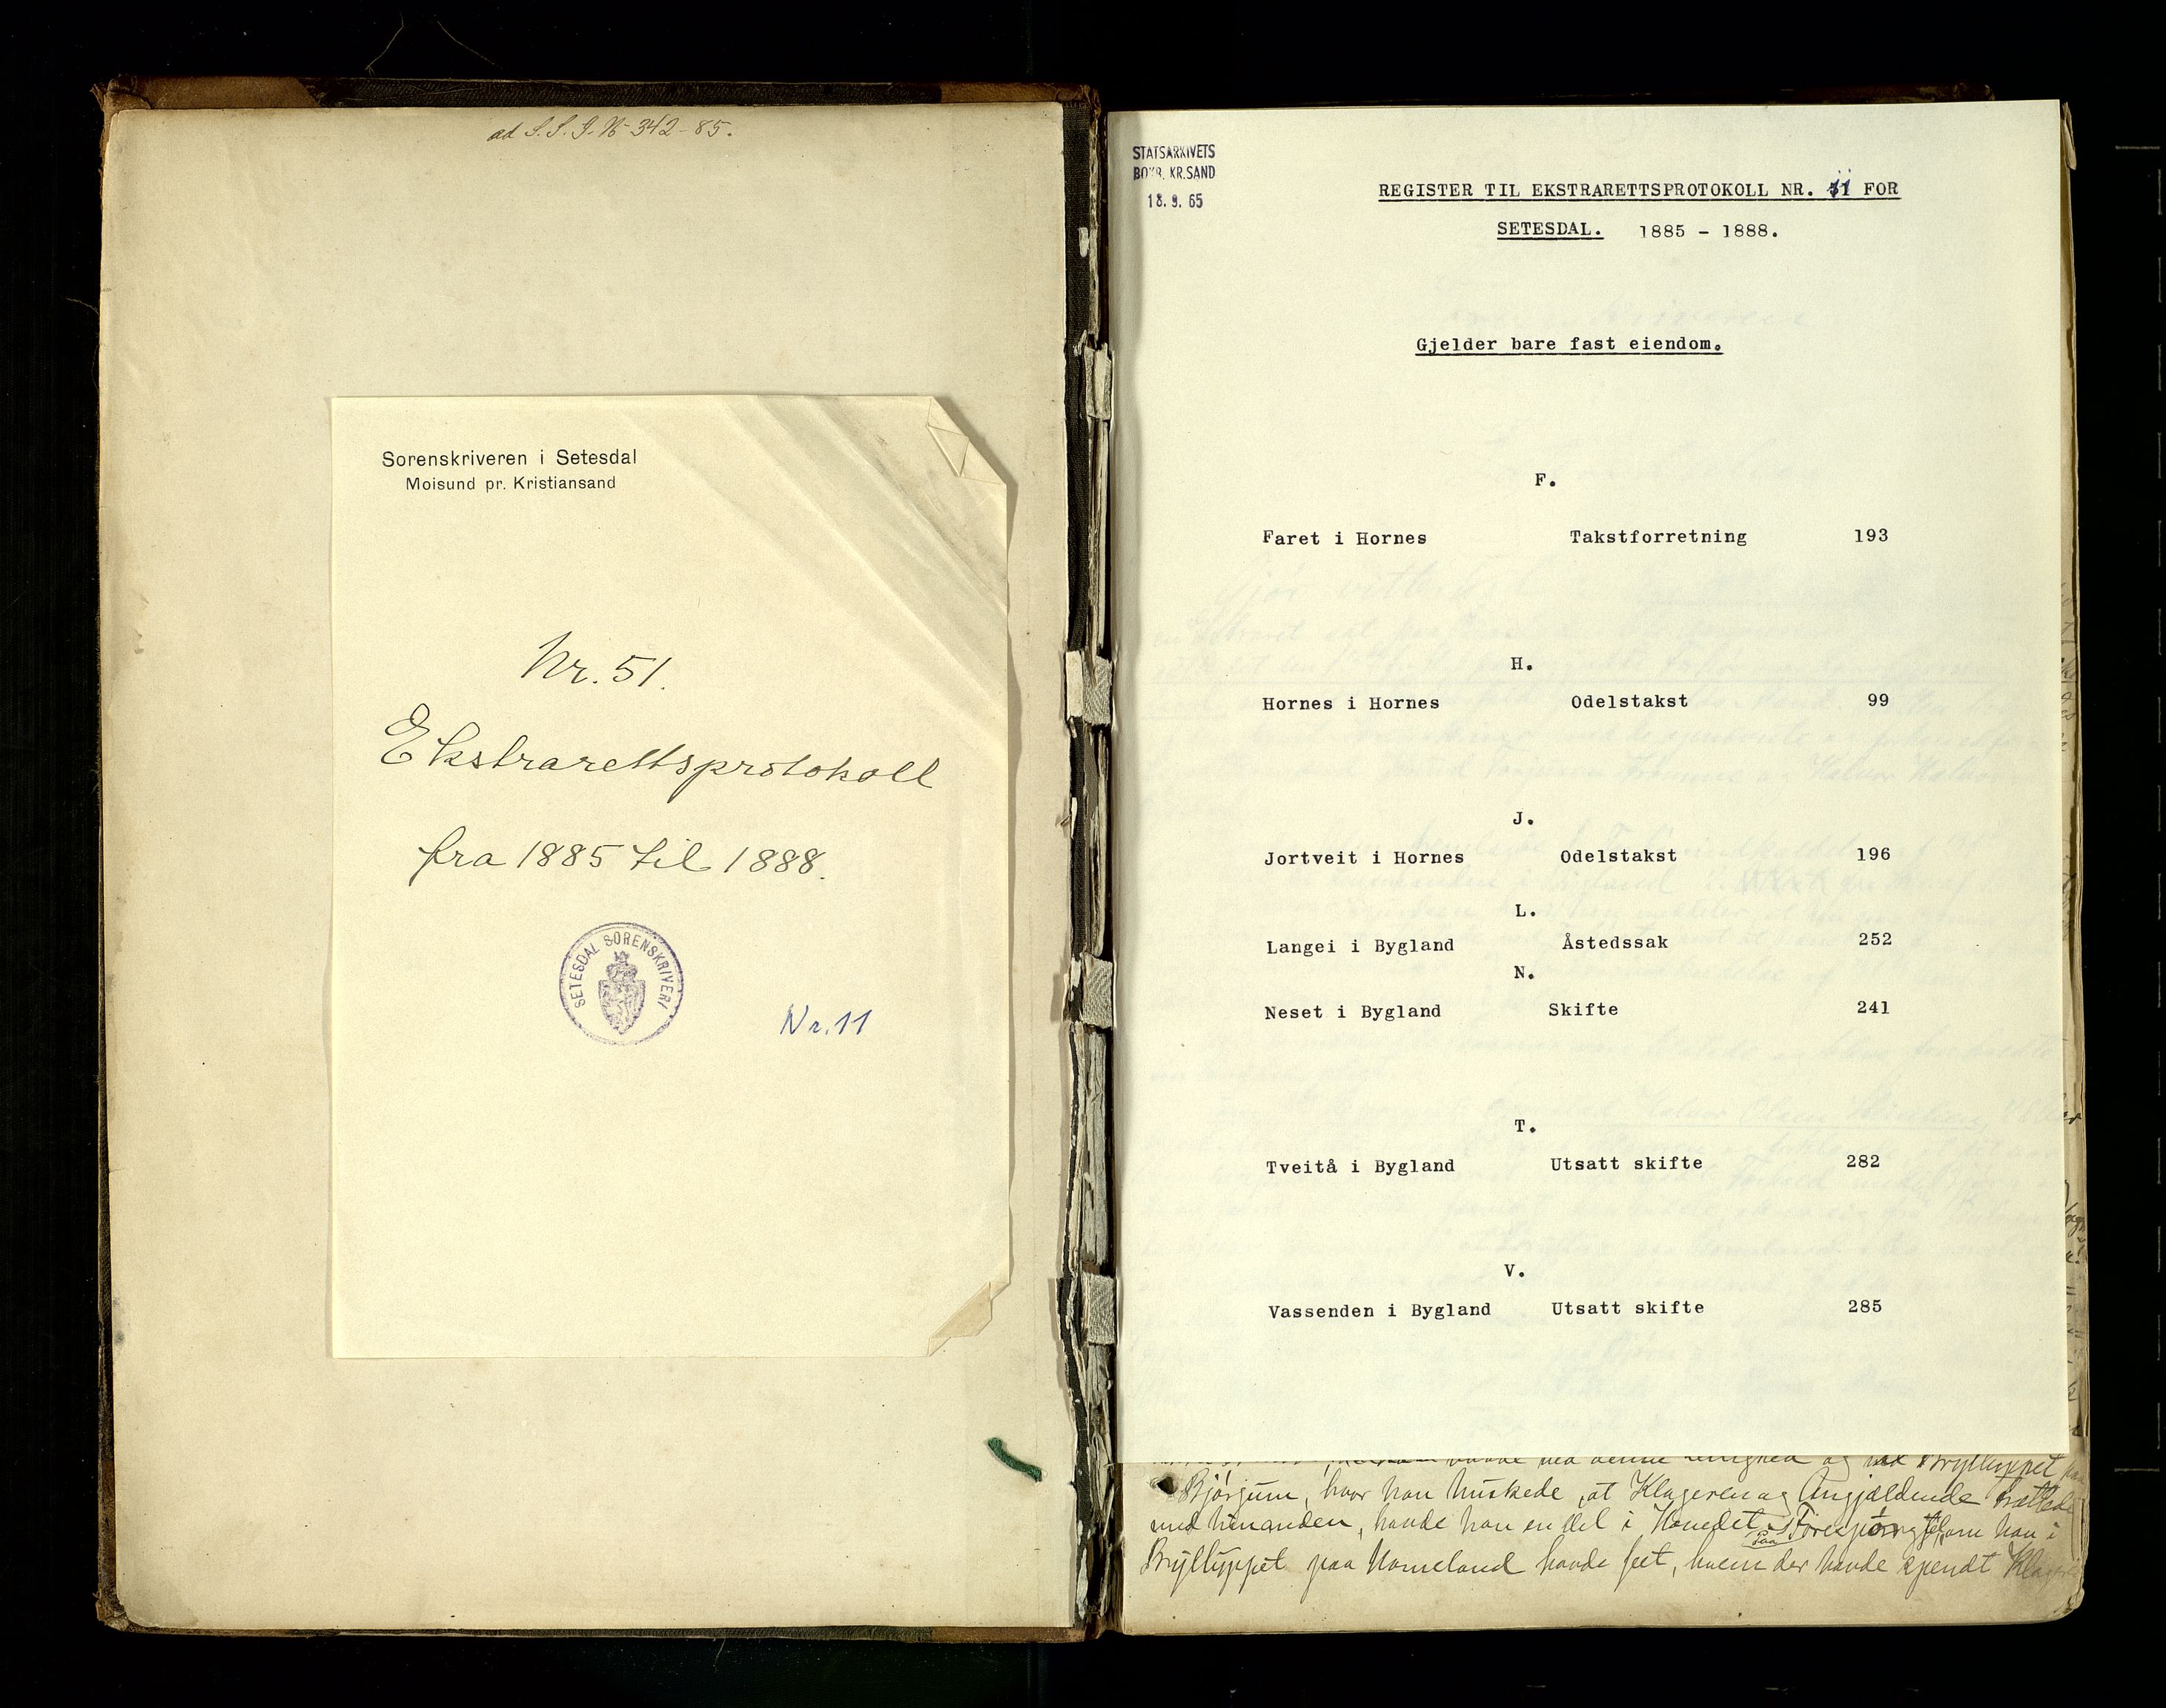 Setesdal sorenskriveri, SAK/1221-0011/F/Fb/L0011: Ekstrarettsprotokoll nr 11, 1885-1888